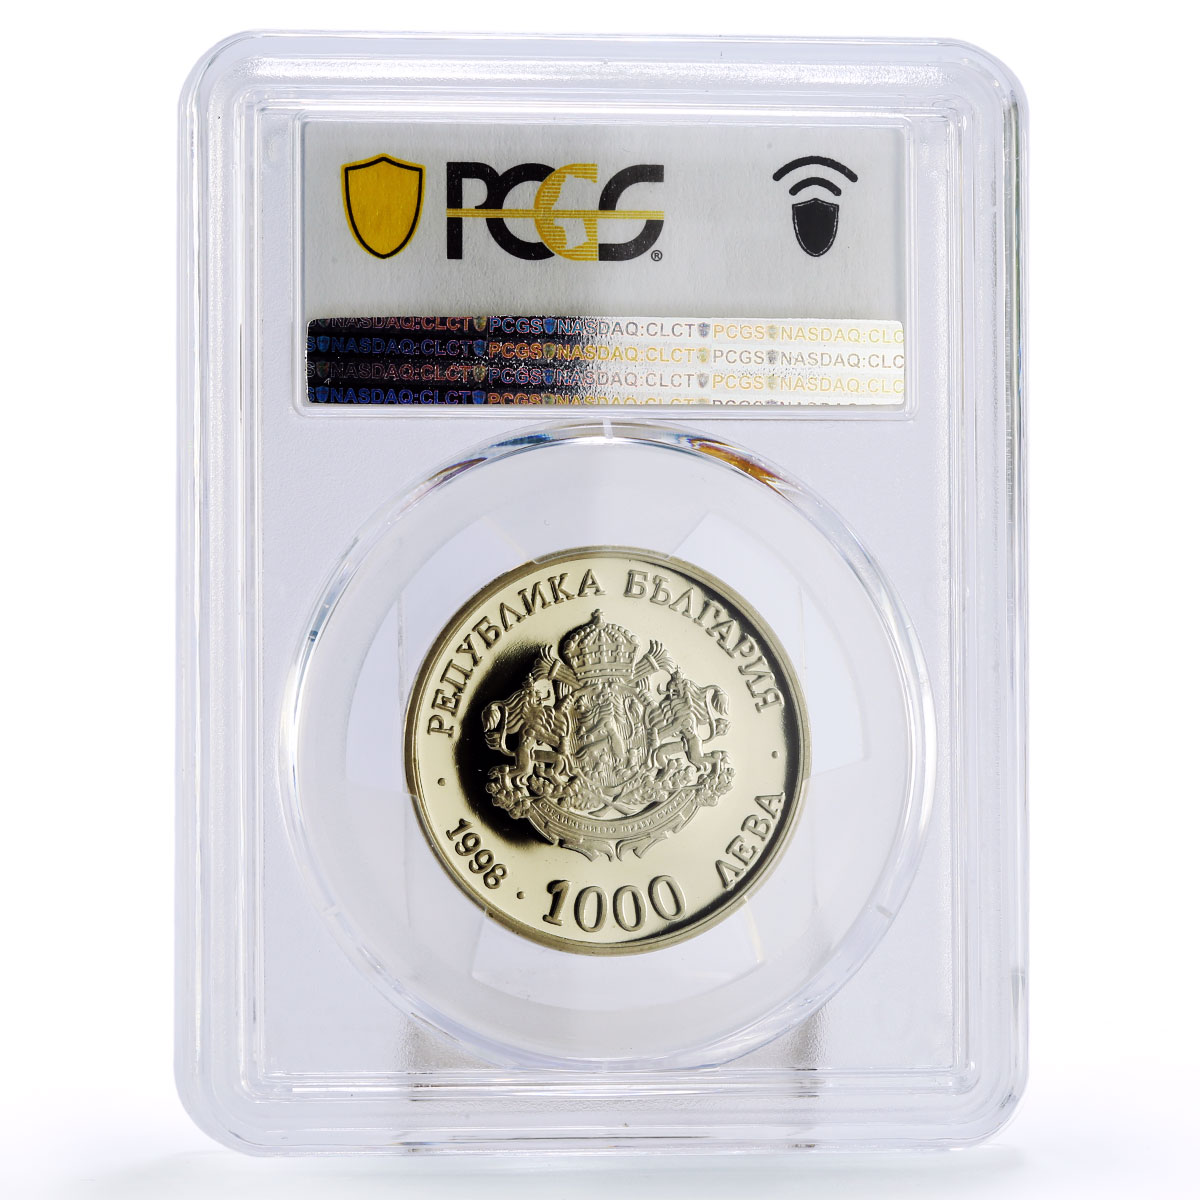 Bulgaria 1000 leva National Telegraph Agency Globe PR69 PCGS CuNi coin 1998